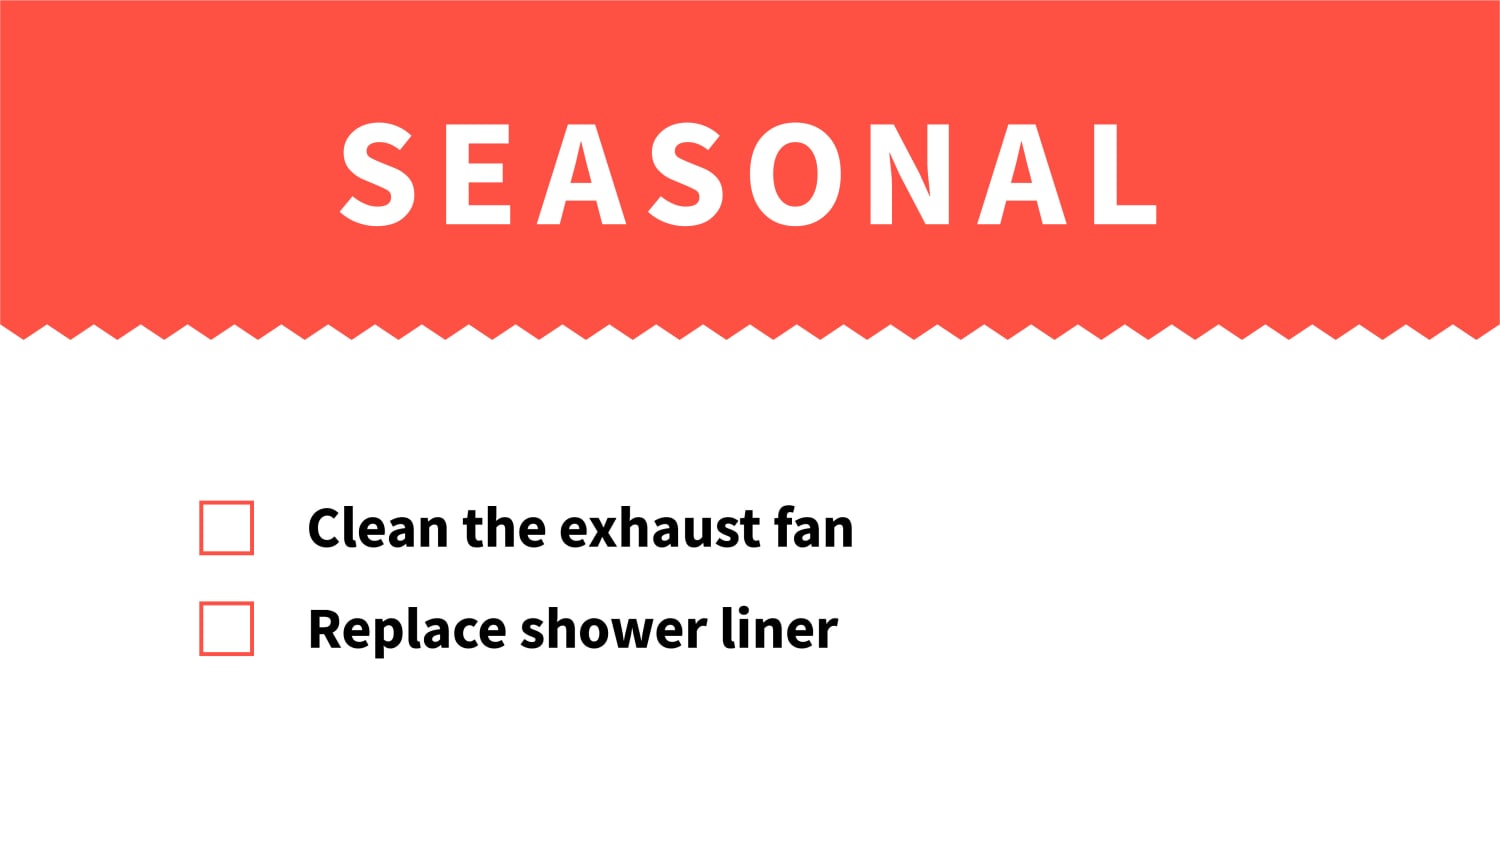 https://media-cldnry.s-nbcnews.com/image/upload/rockcms/2023-03/seasonal-bathroom-cleaning-checklist-ls-230310-3e83ec.jpg